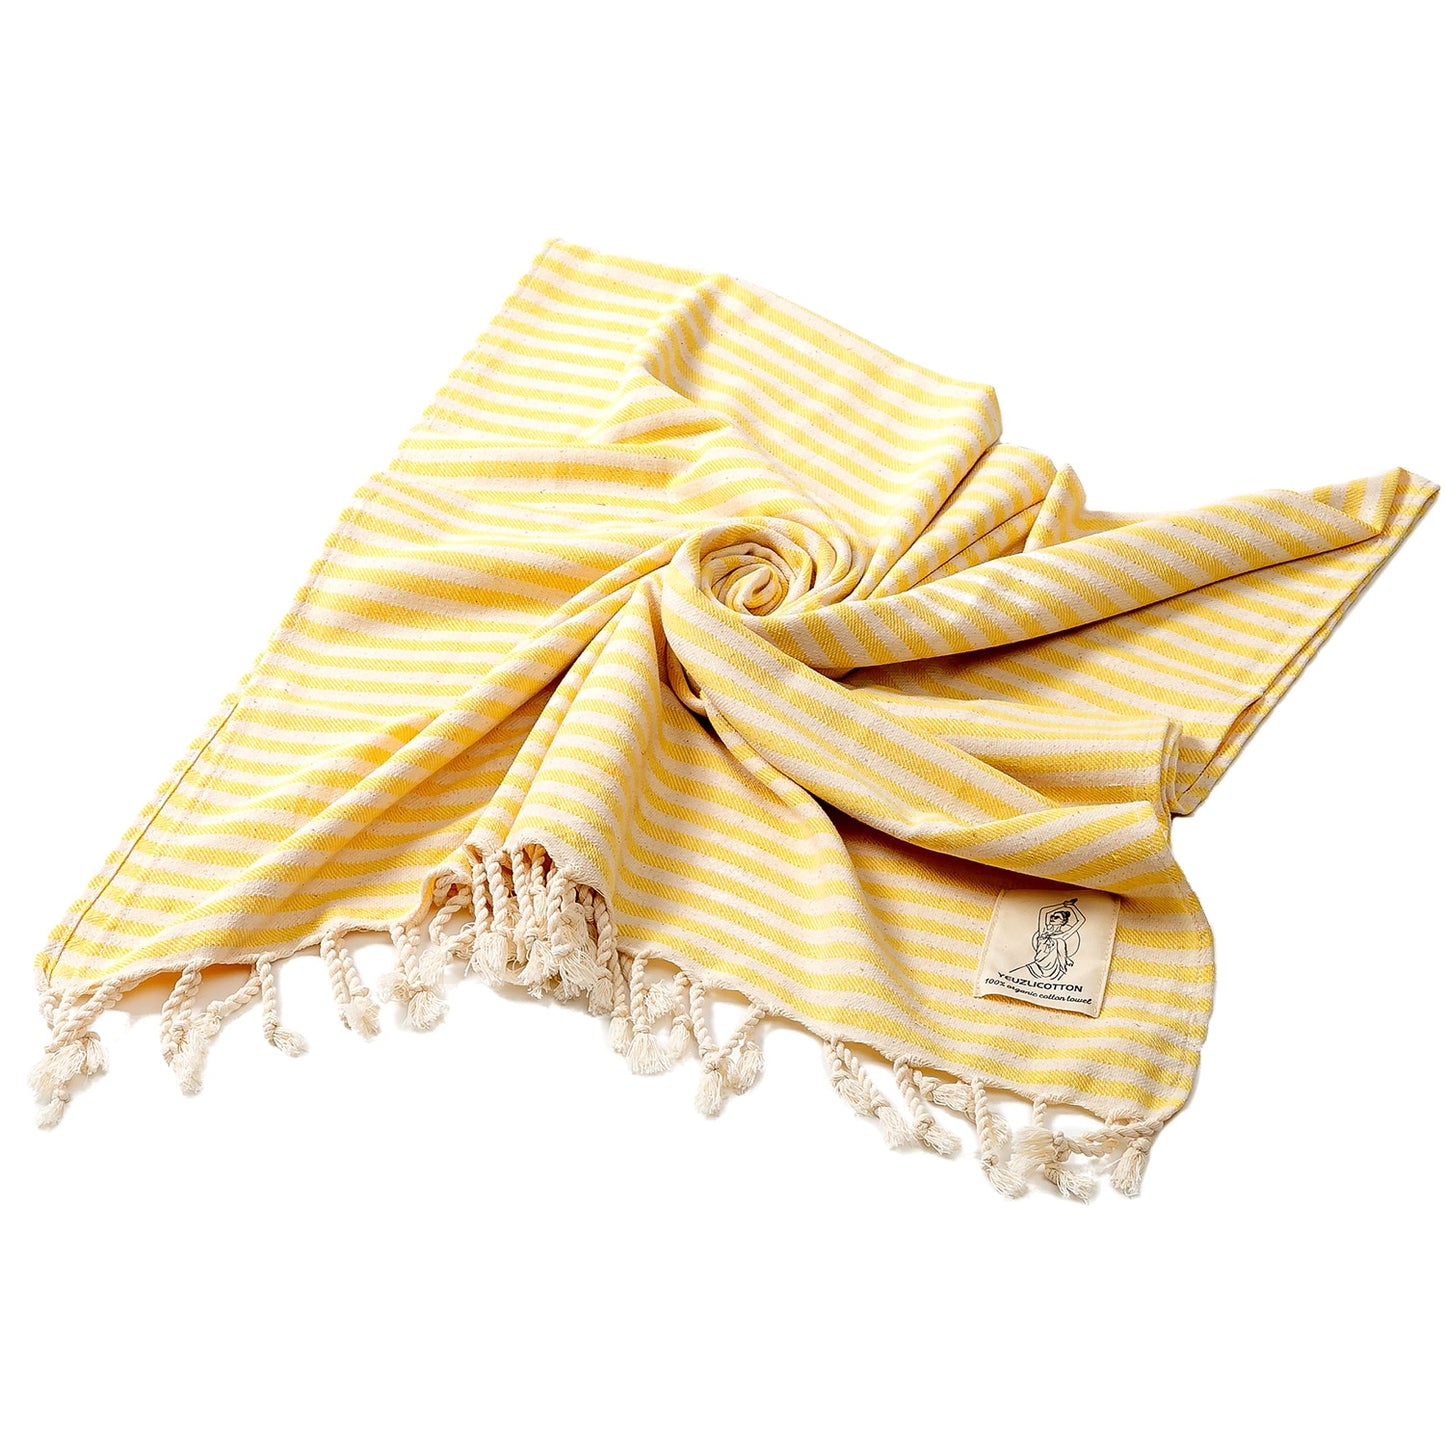 YEUZLICOTTON Hot Sale luxury Striped Tassel 100% cotton sauna spa bath towel For Home 100*180CM Travel Turkish Large beach towel